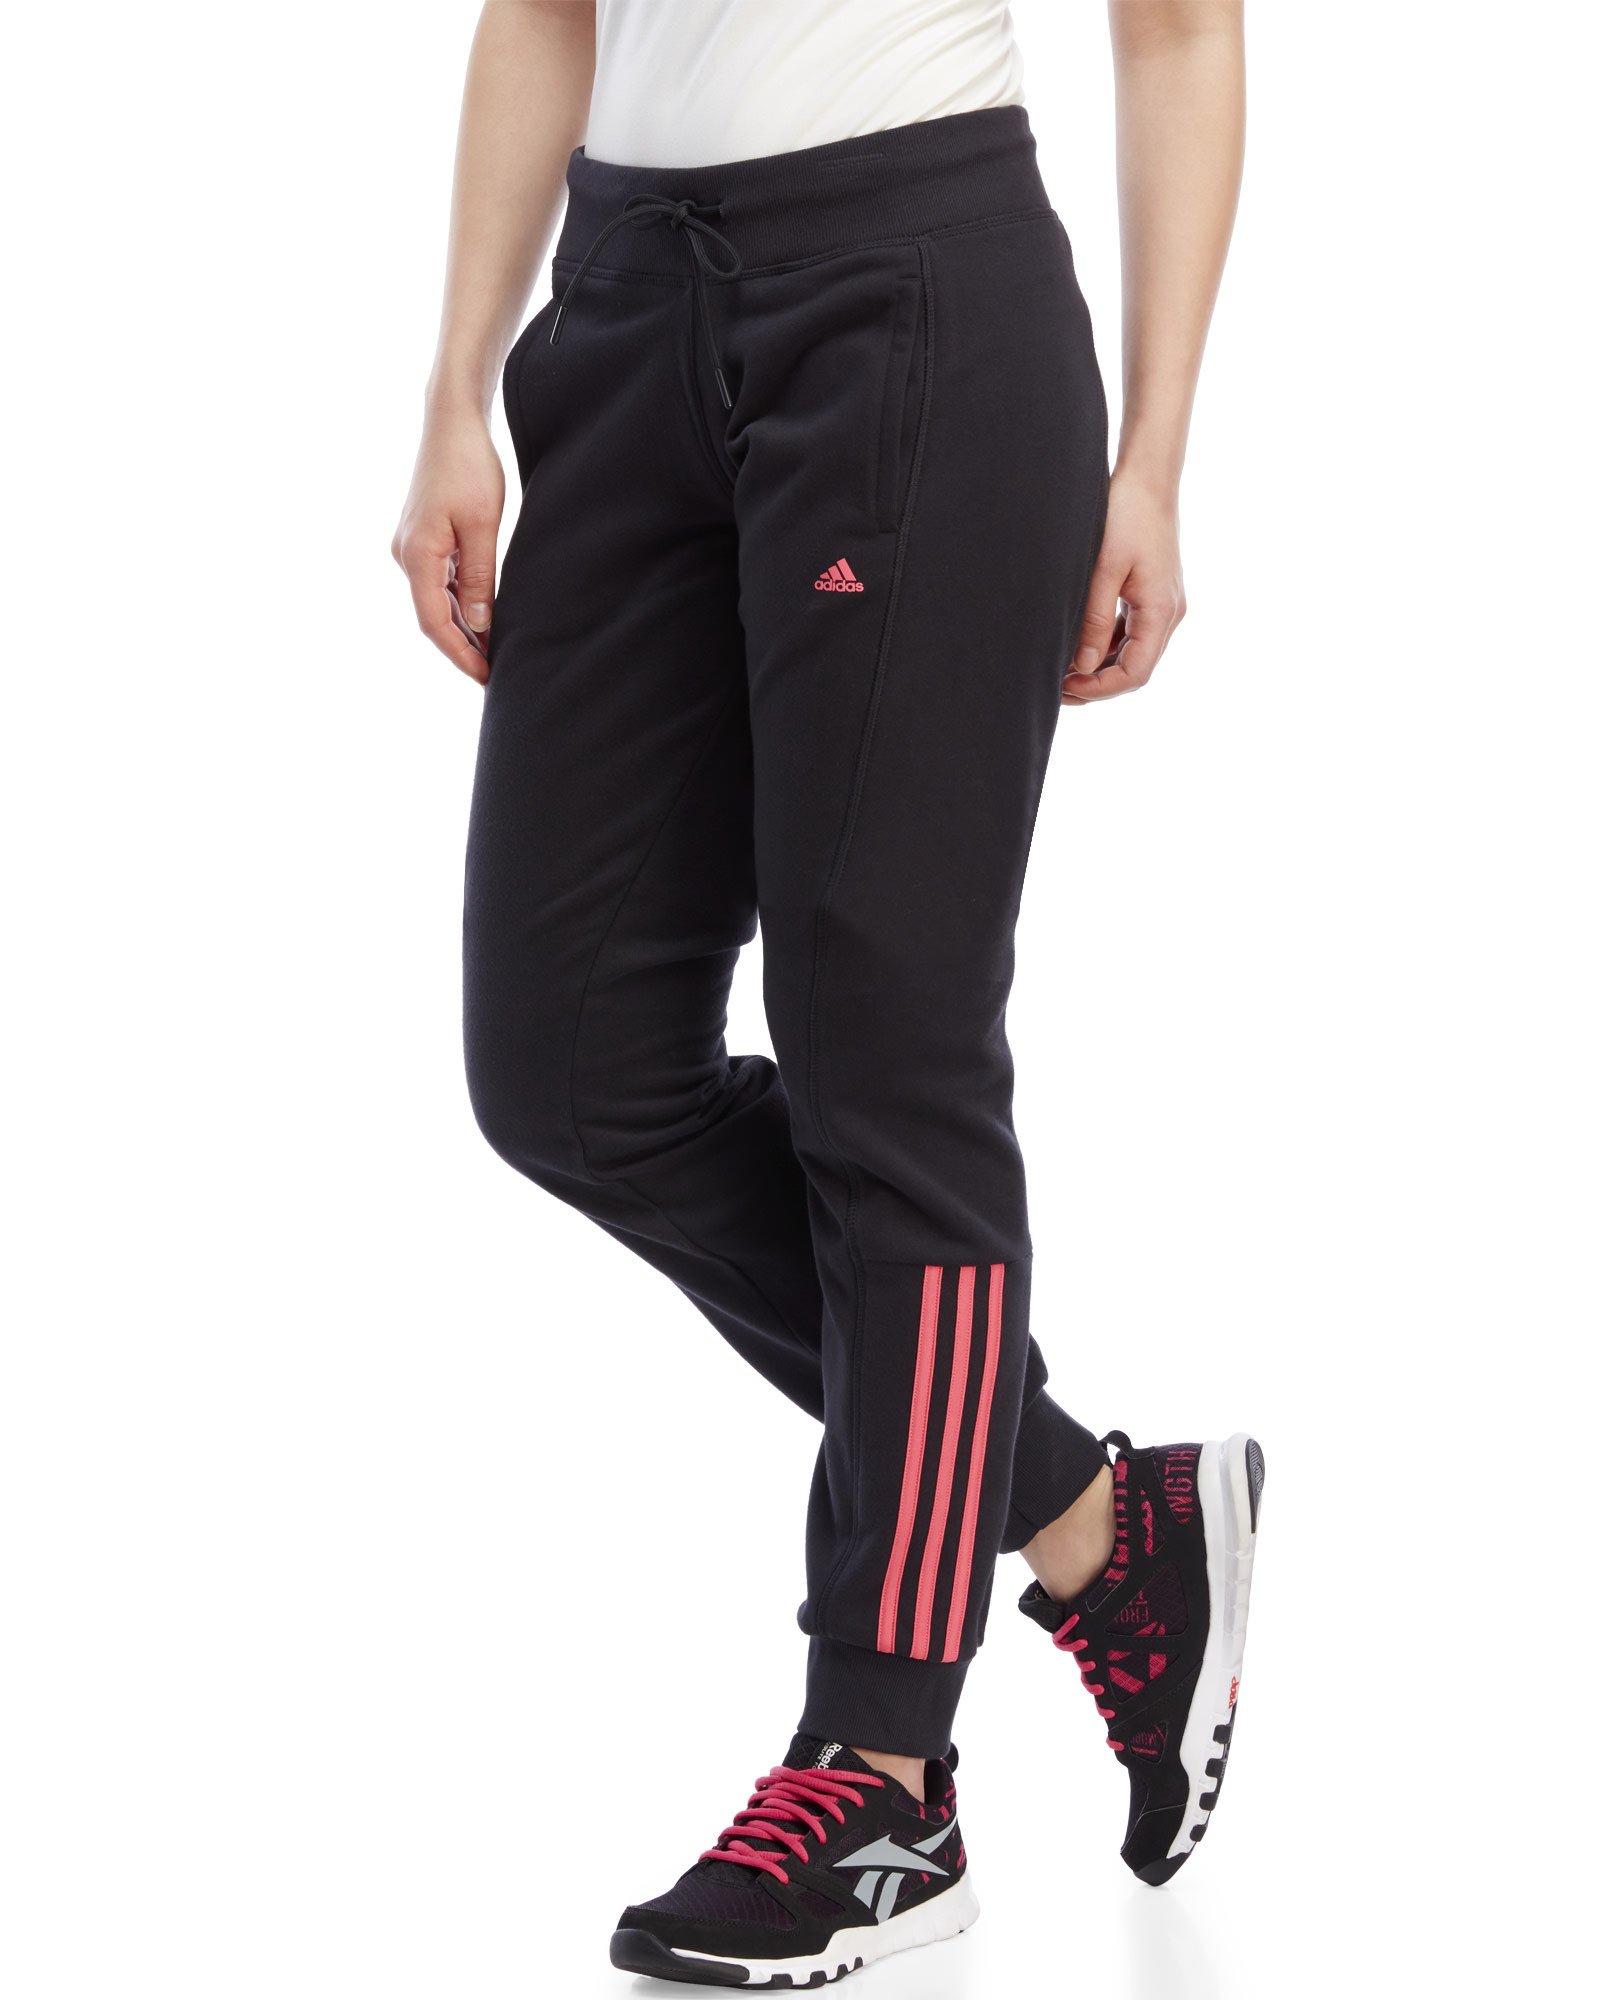 Blackpink Adidas Pants - blackpink 